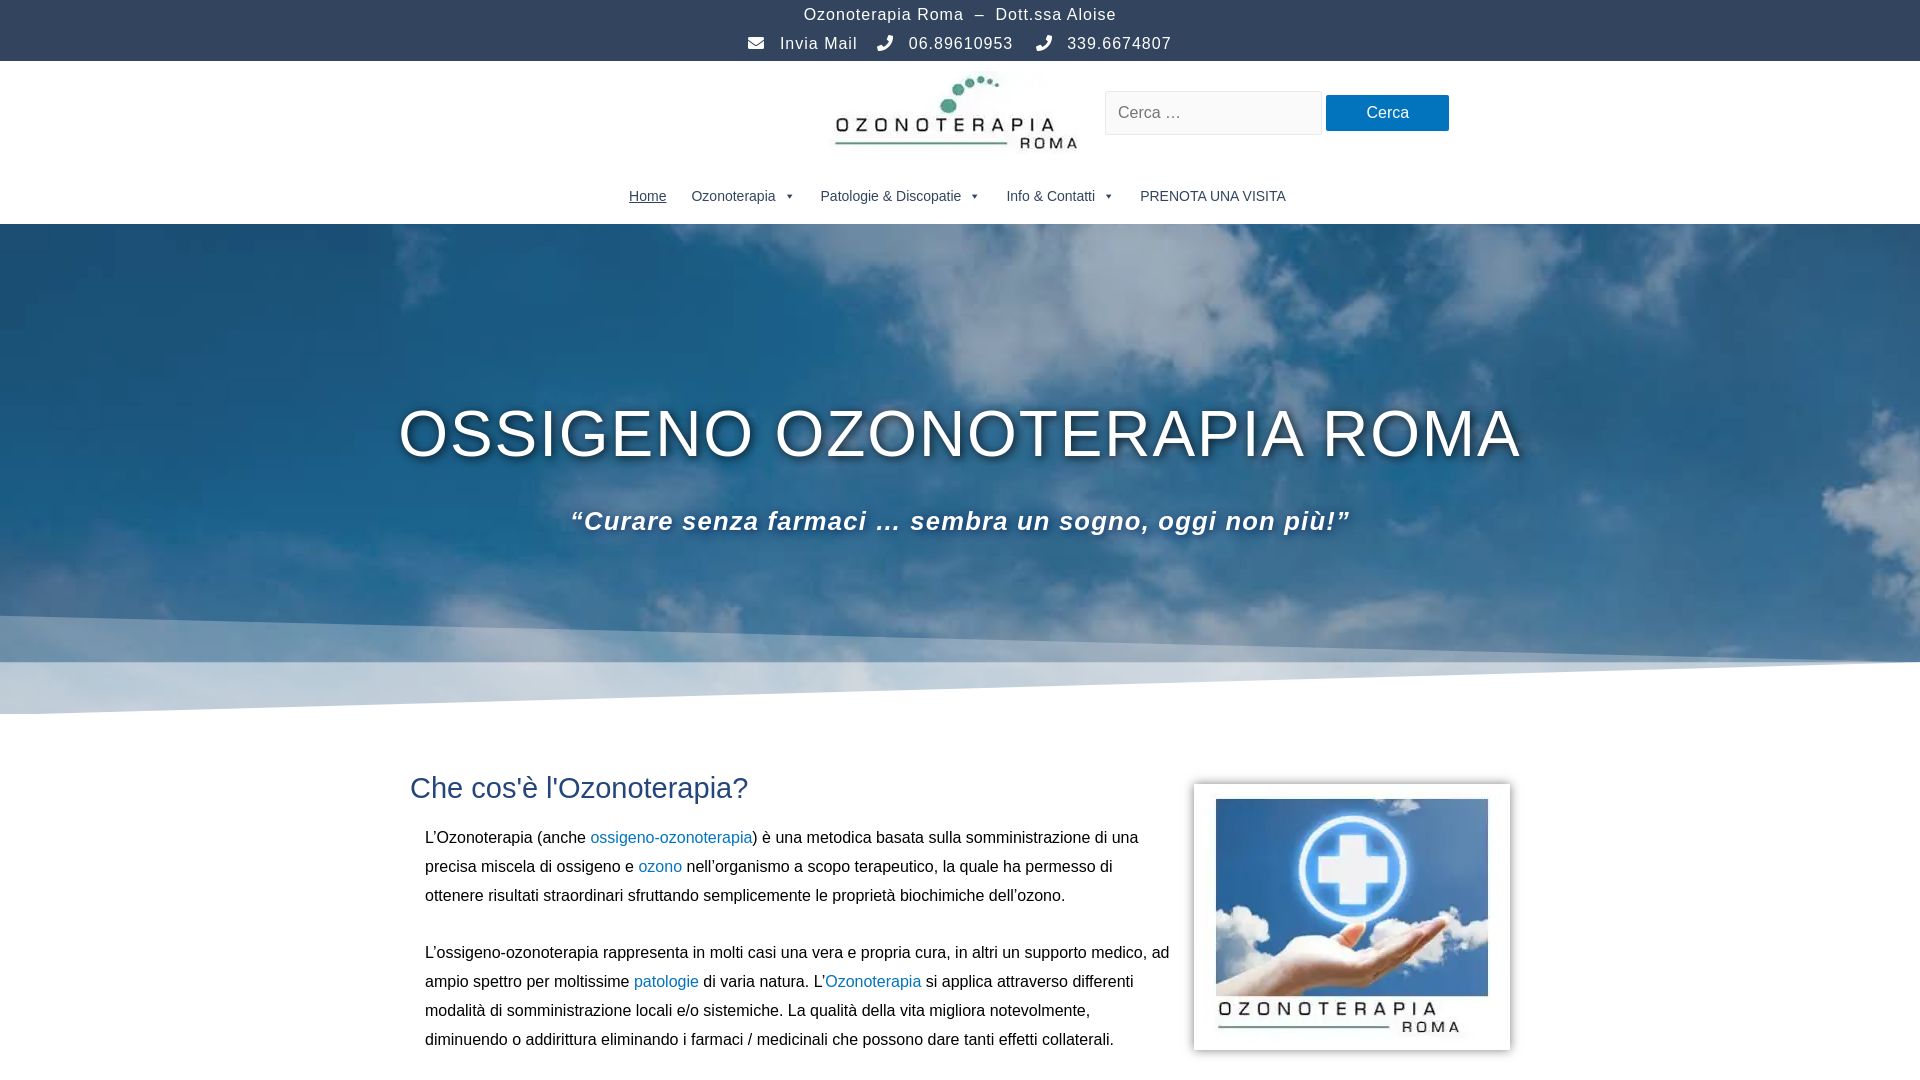 Status do site ozonoterapiaroma.it está   ONLINE